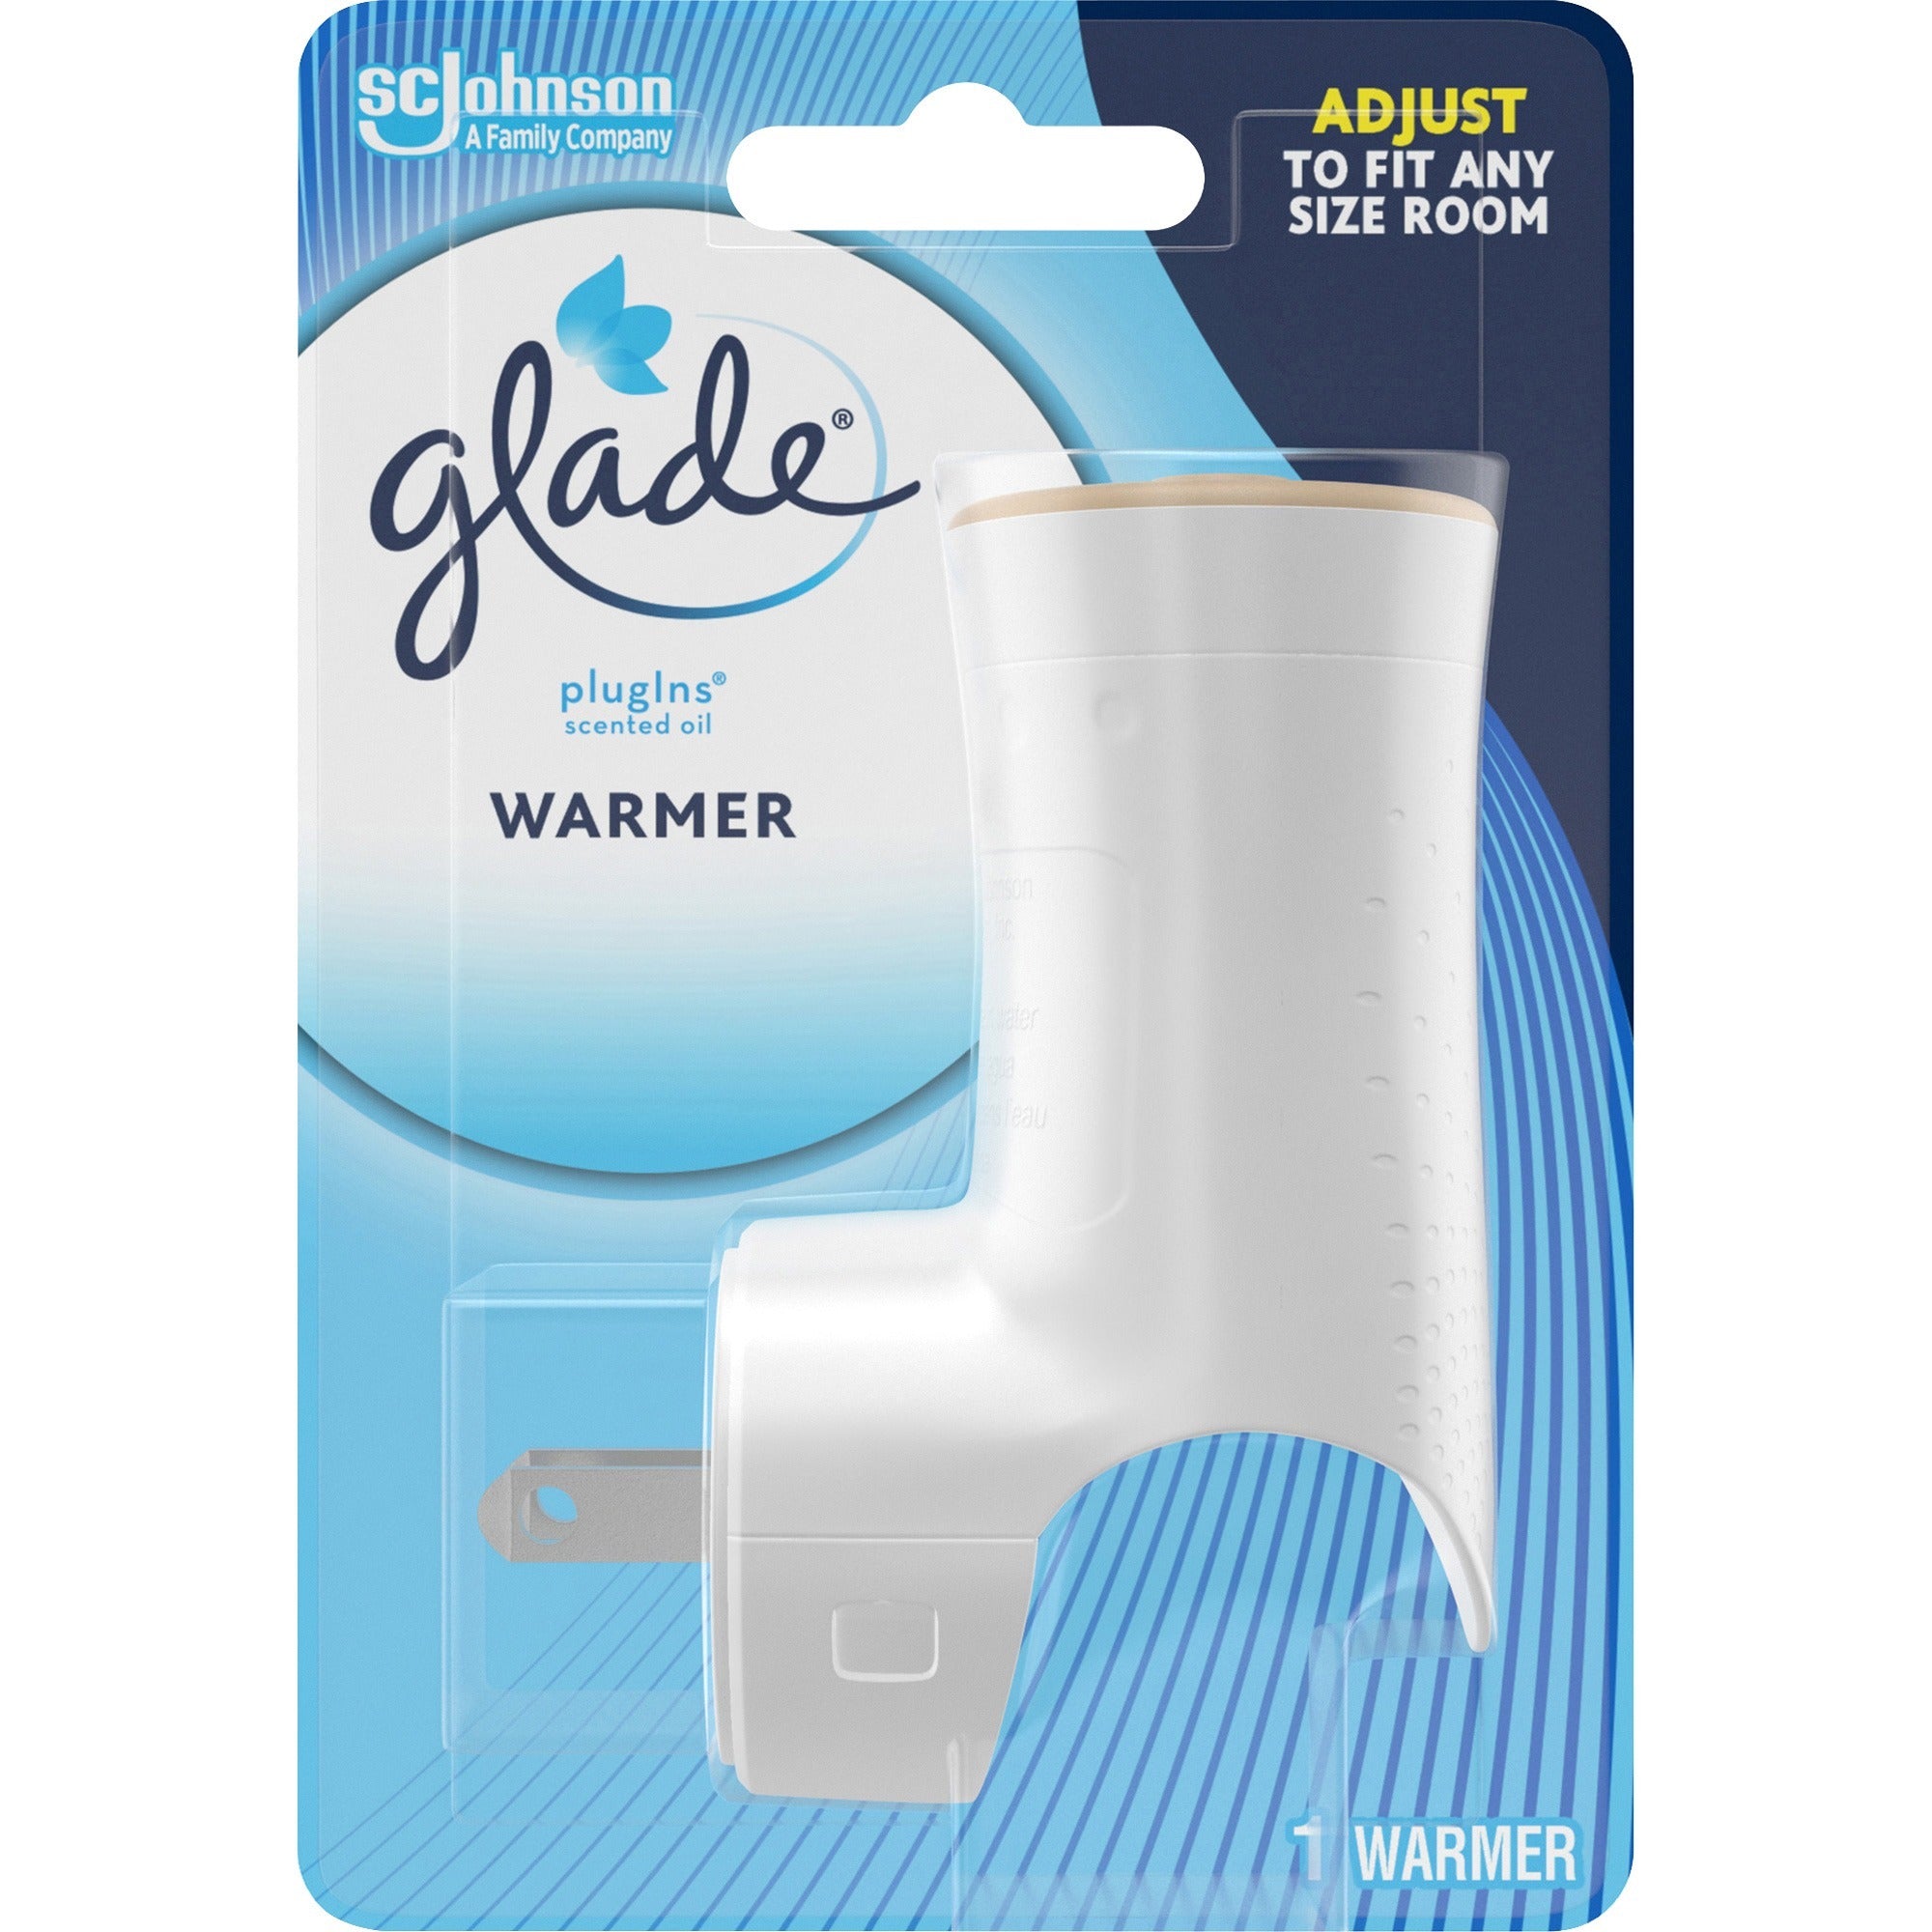 glade-plugins-scented-oil-warmer-5-carton-white_sjn334583ct - 2